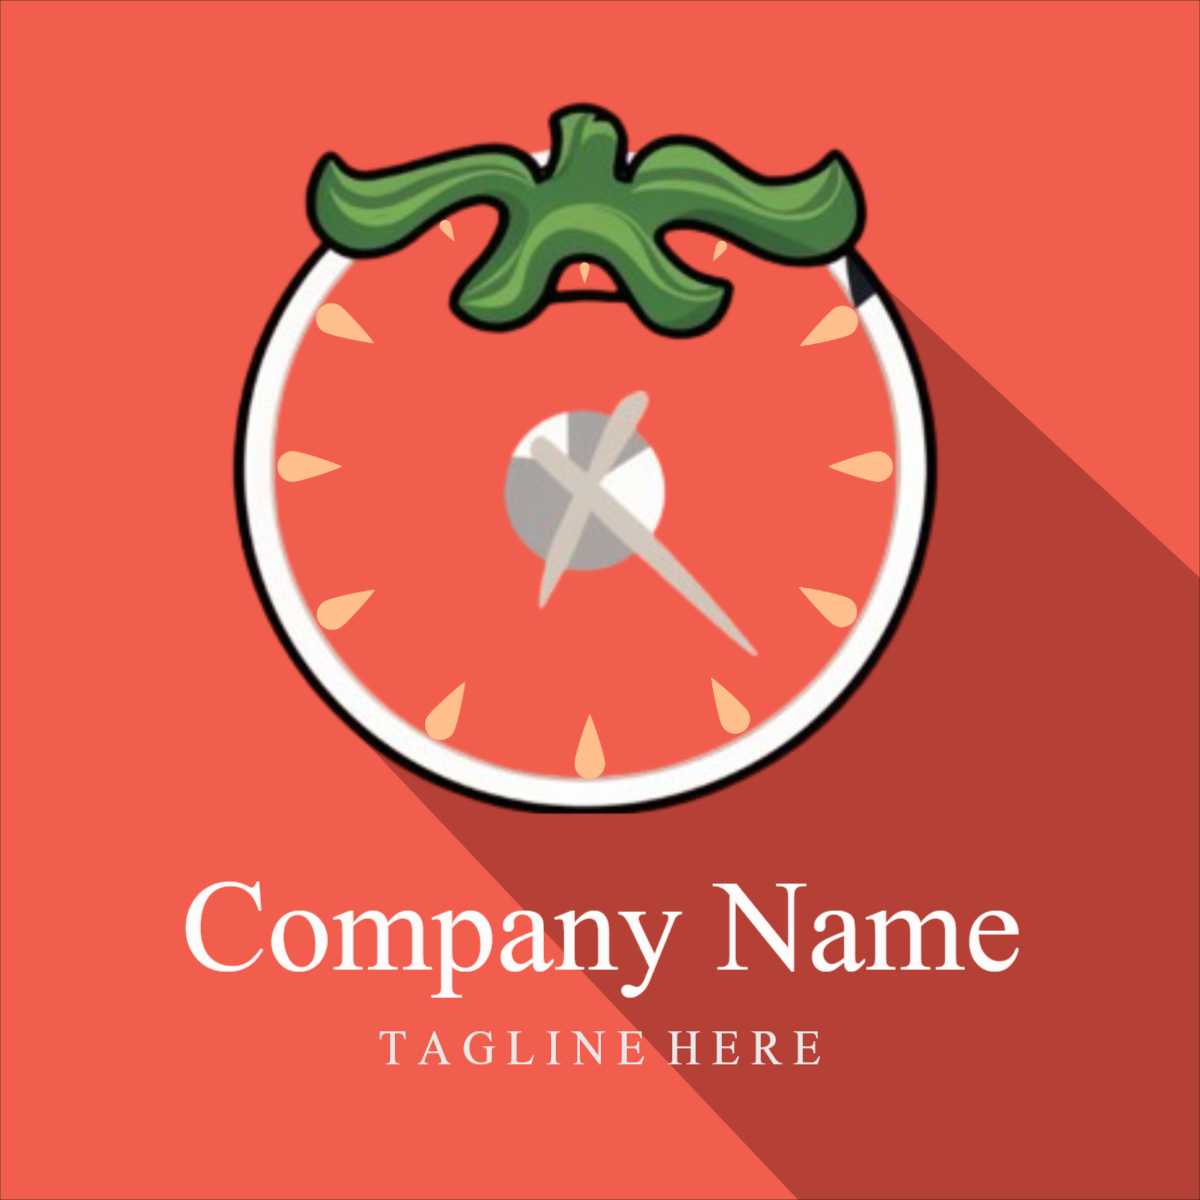 Tomato Clock Time Design Template Company logo  Free Template Logo design Download for free